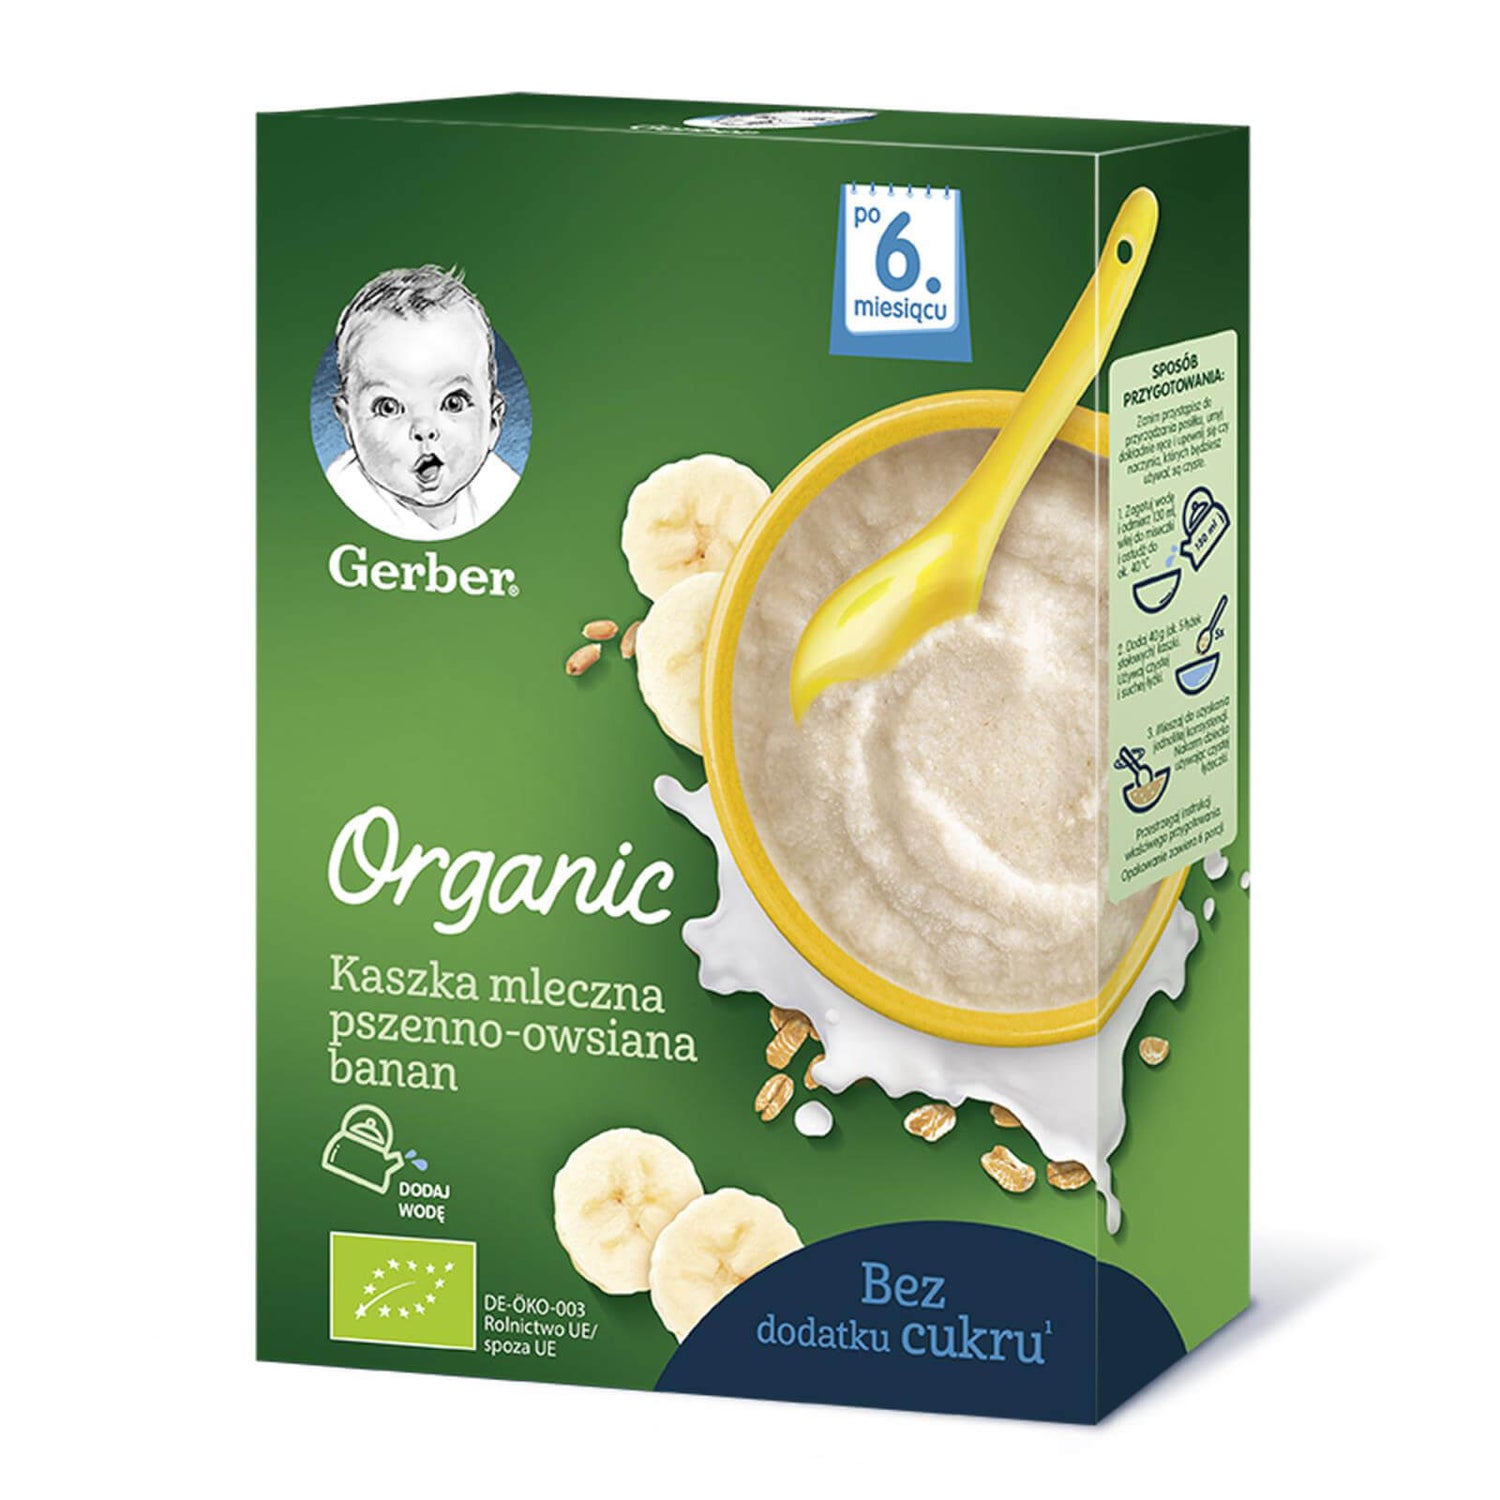 Gerber Organic Kaszka mleczna pszenno-owsiana, banan - 240g